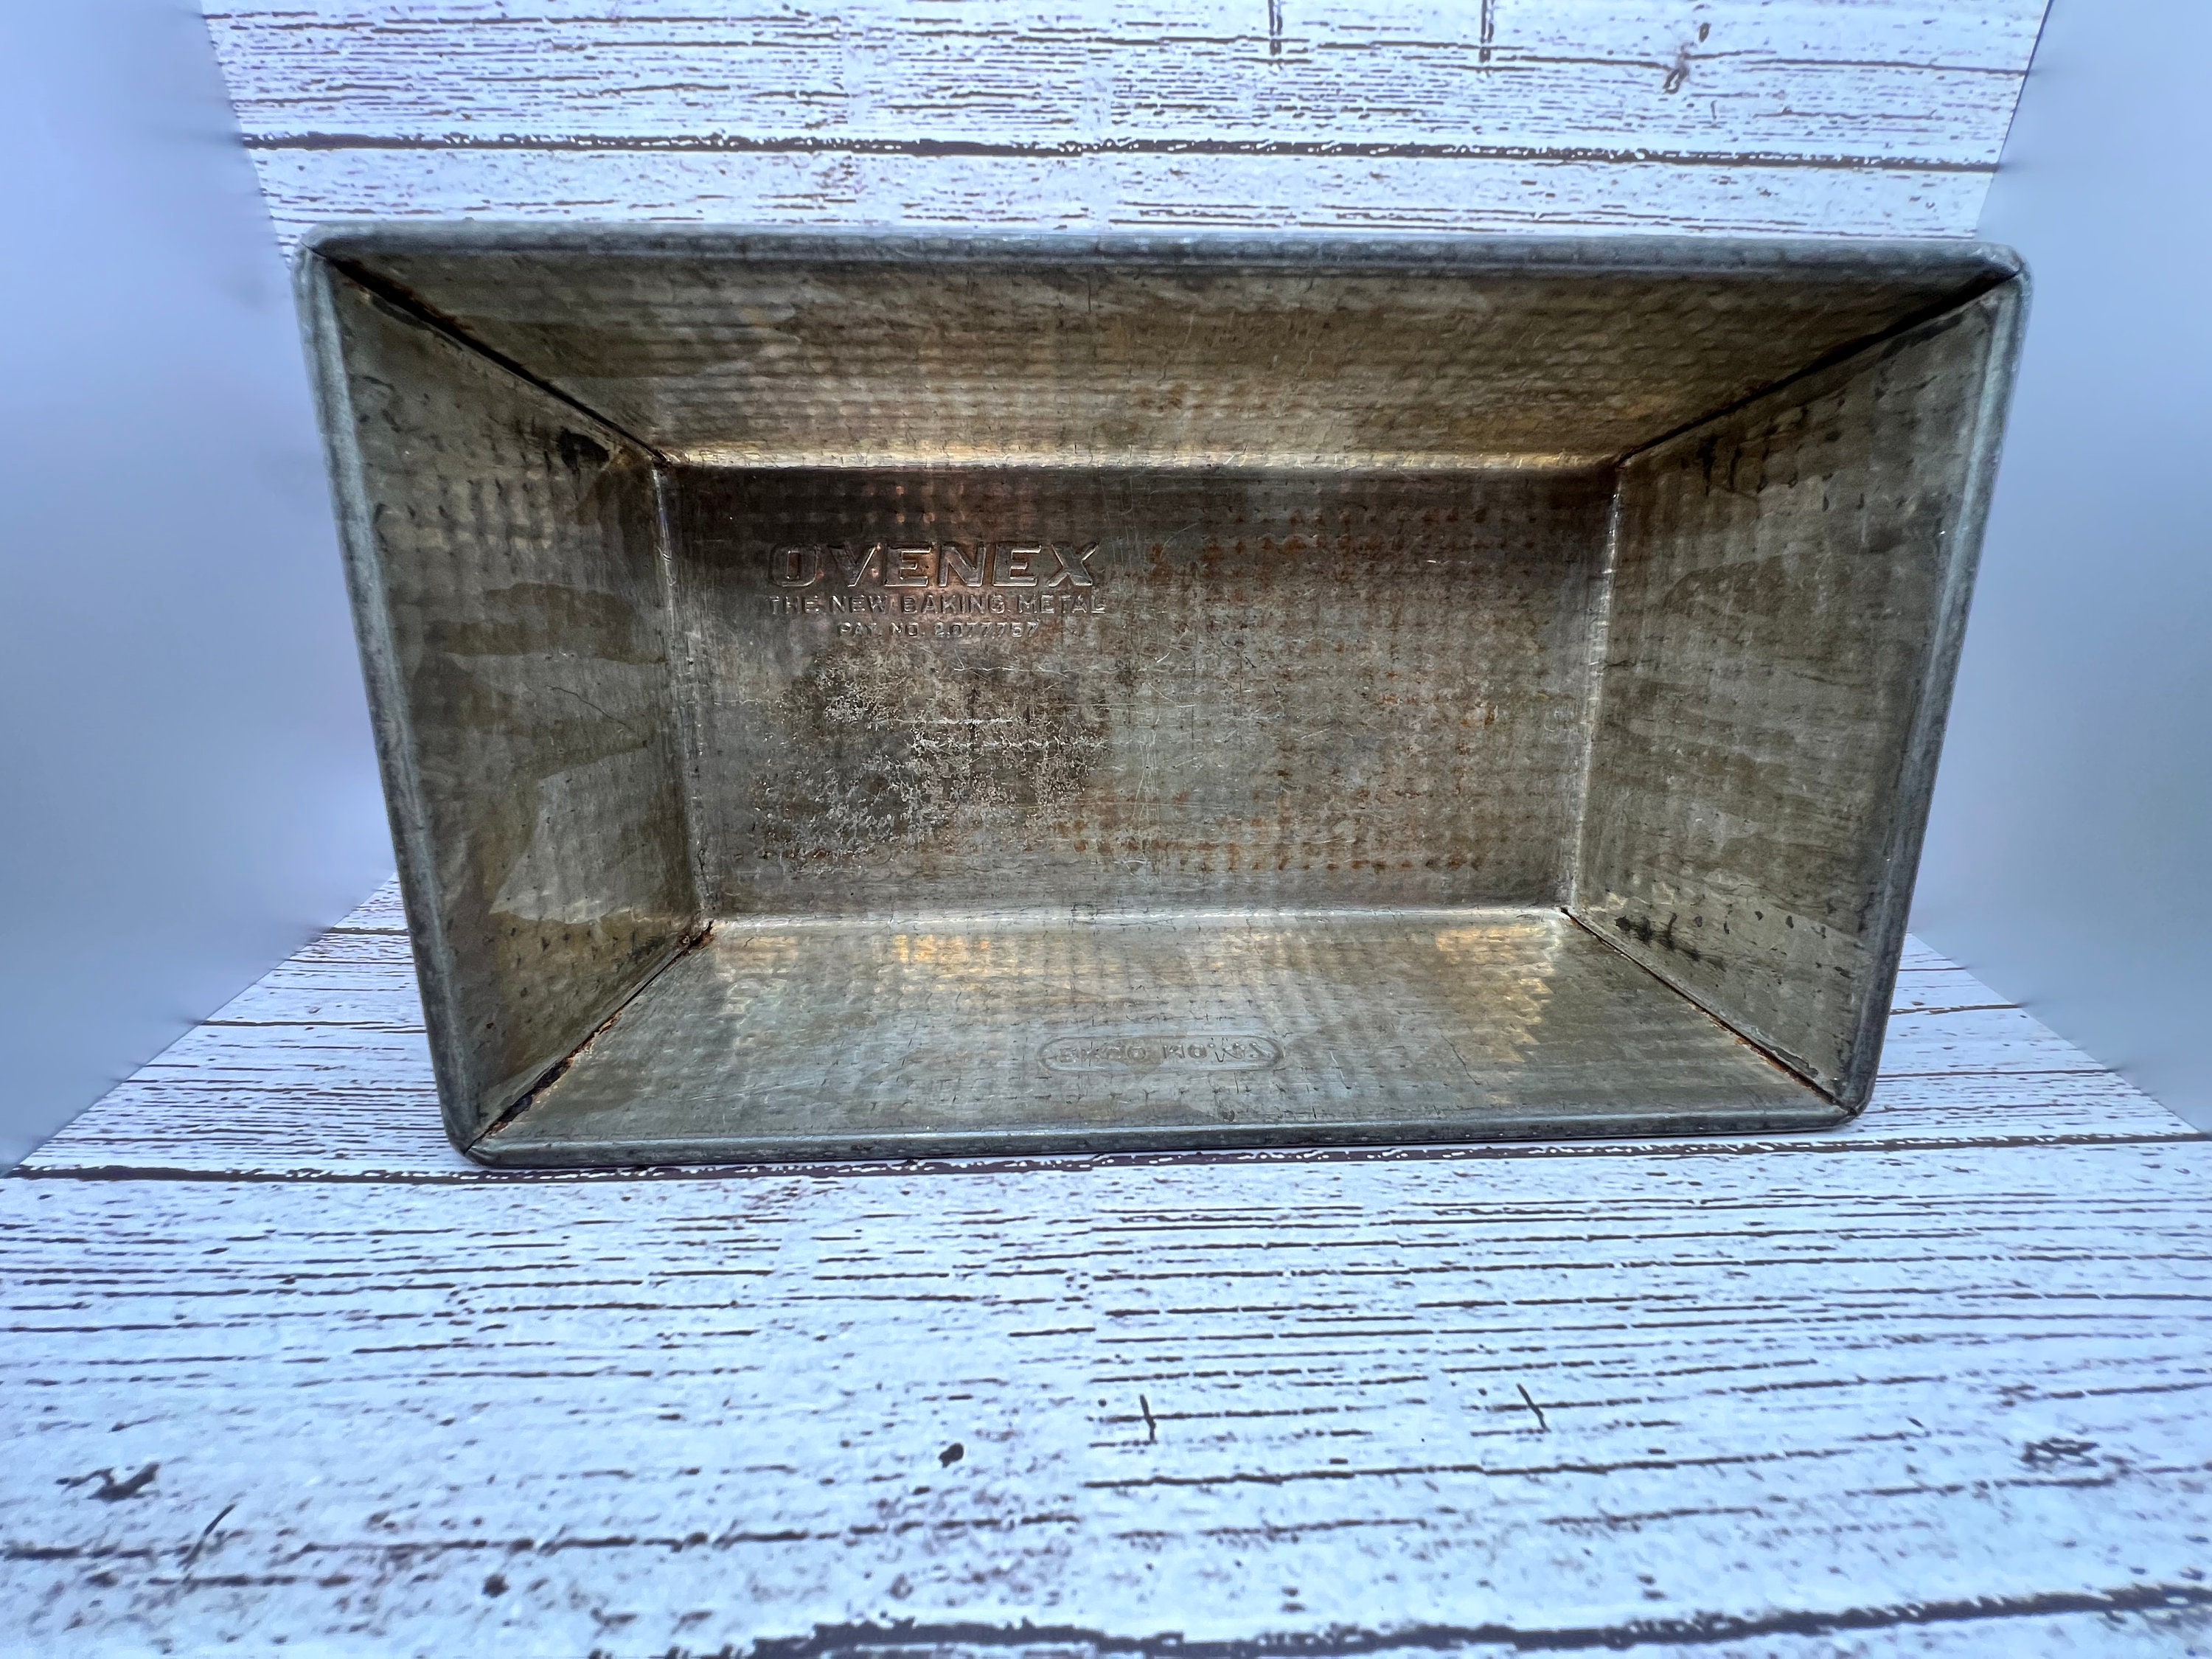 Ovenex N34 starburst texture rectangular baking pan, 1930s 40s vintage  kitchenware